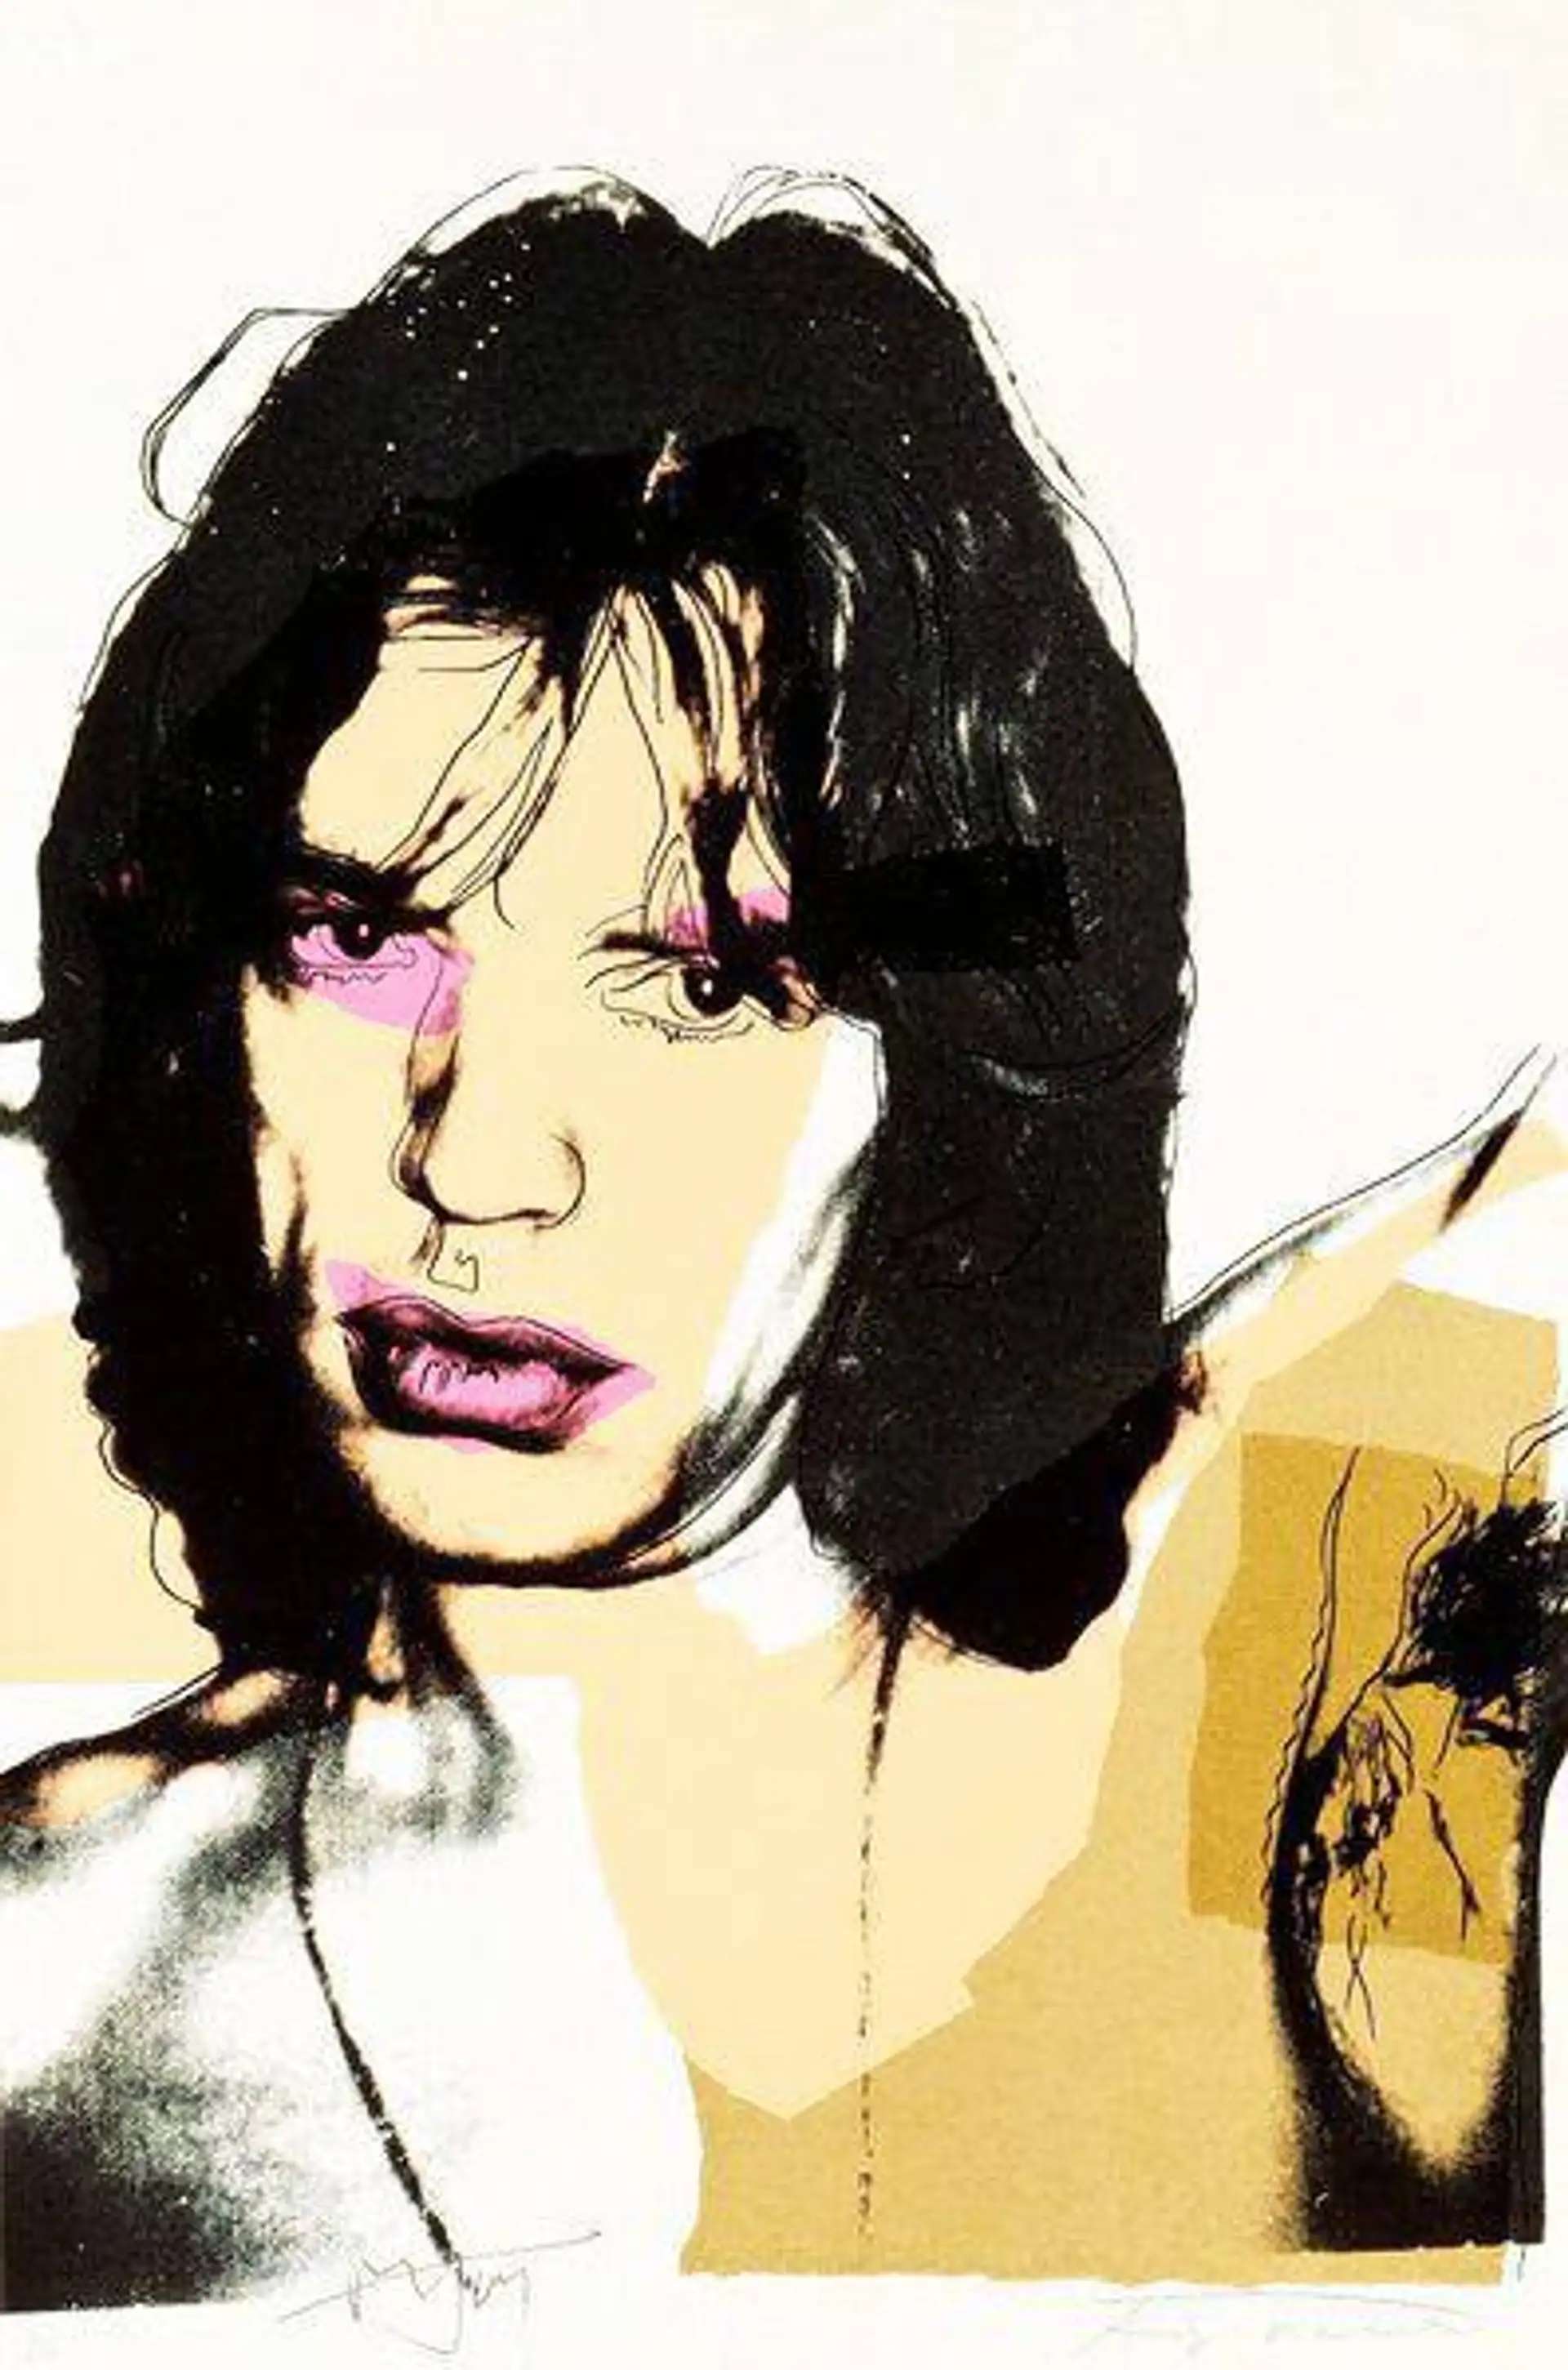 Mick Jagger (F. & S. II.141) by Andy Warhol